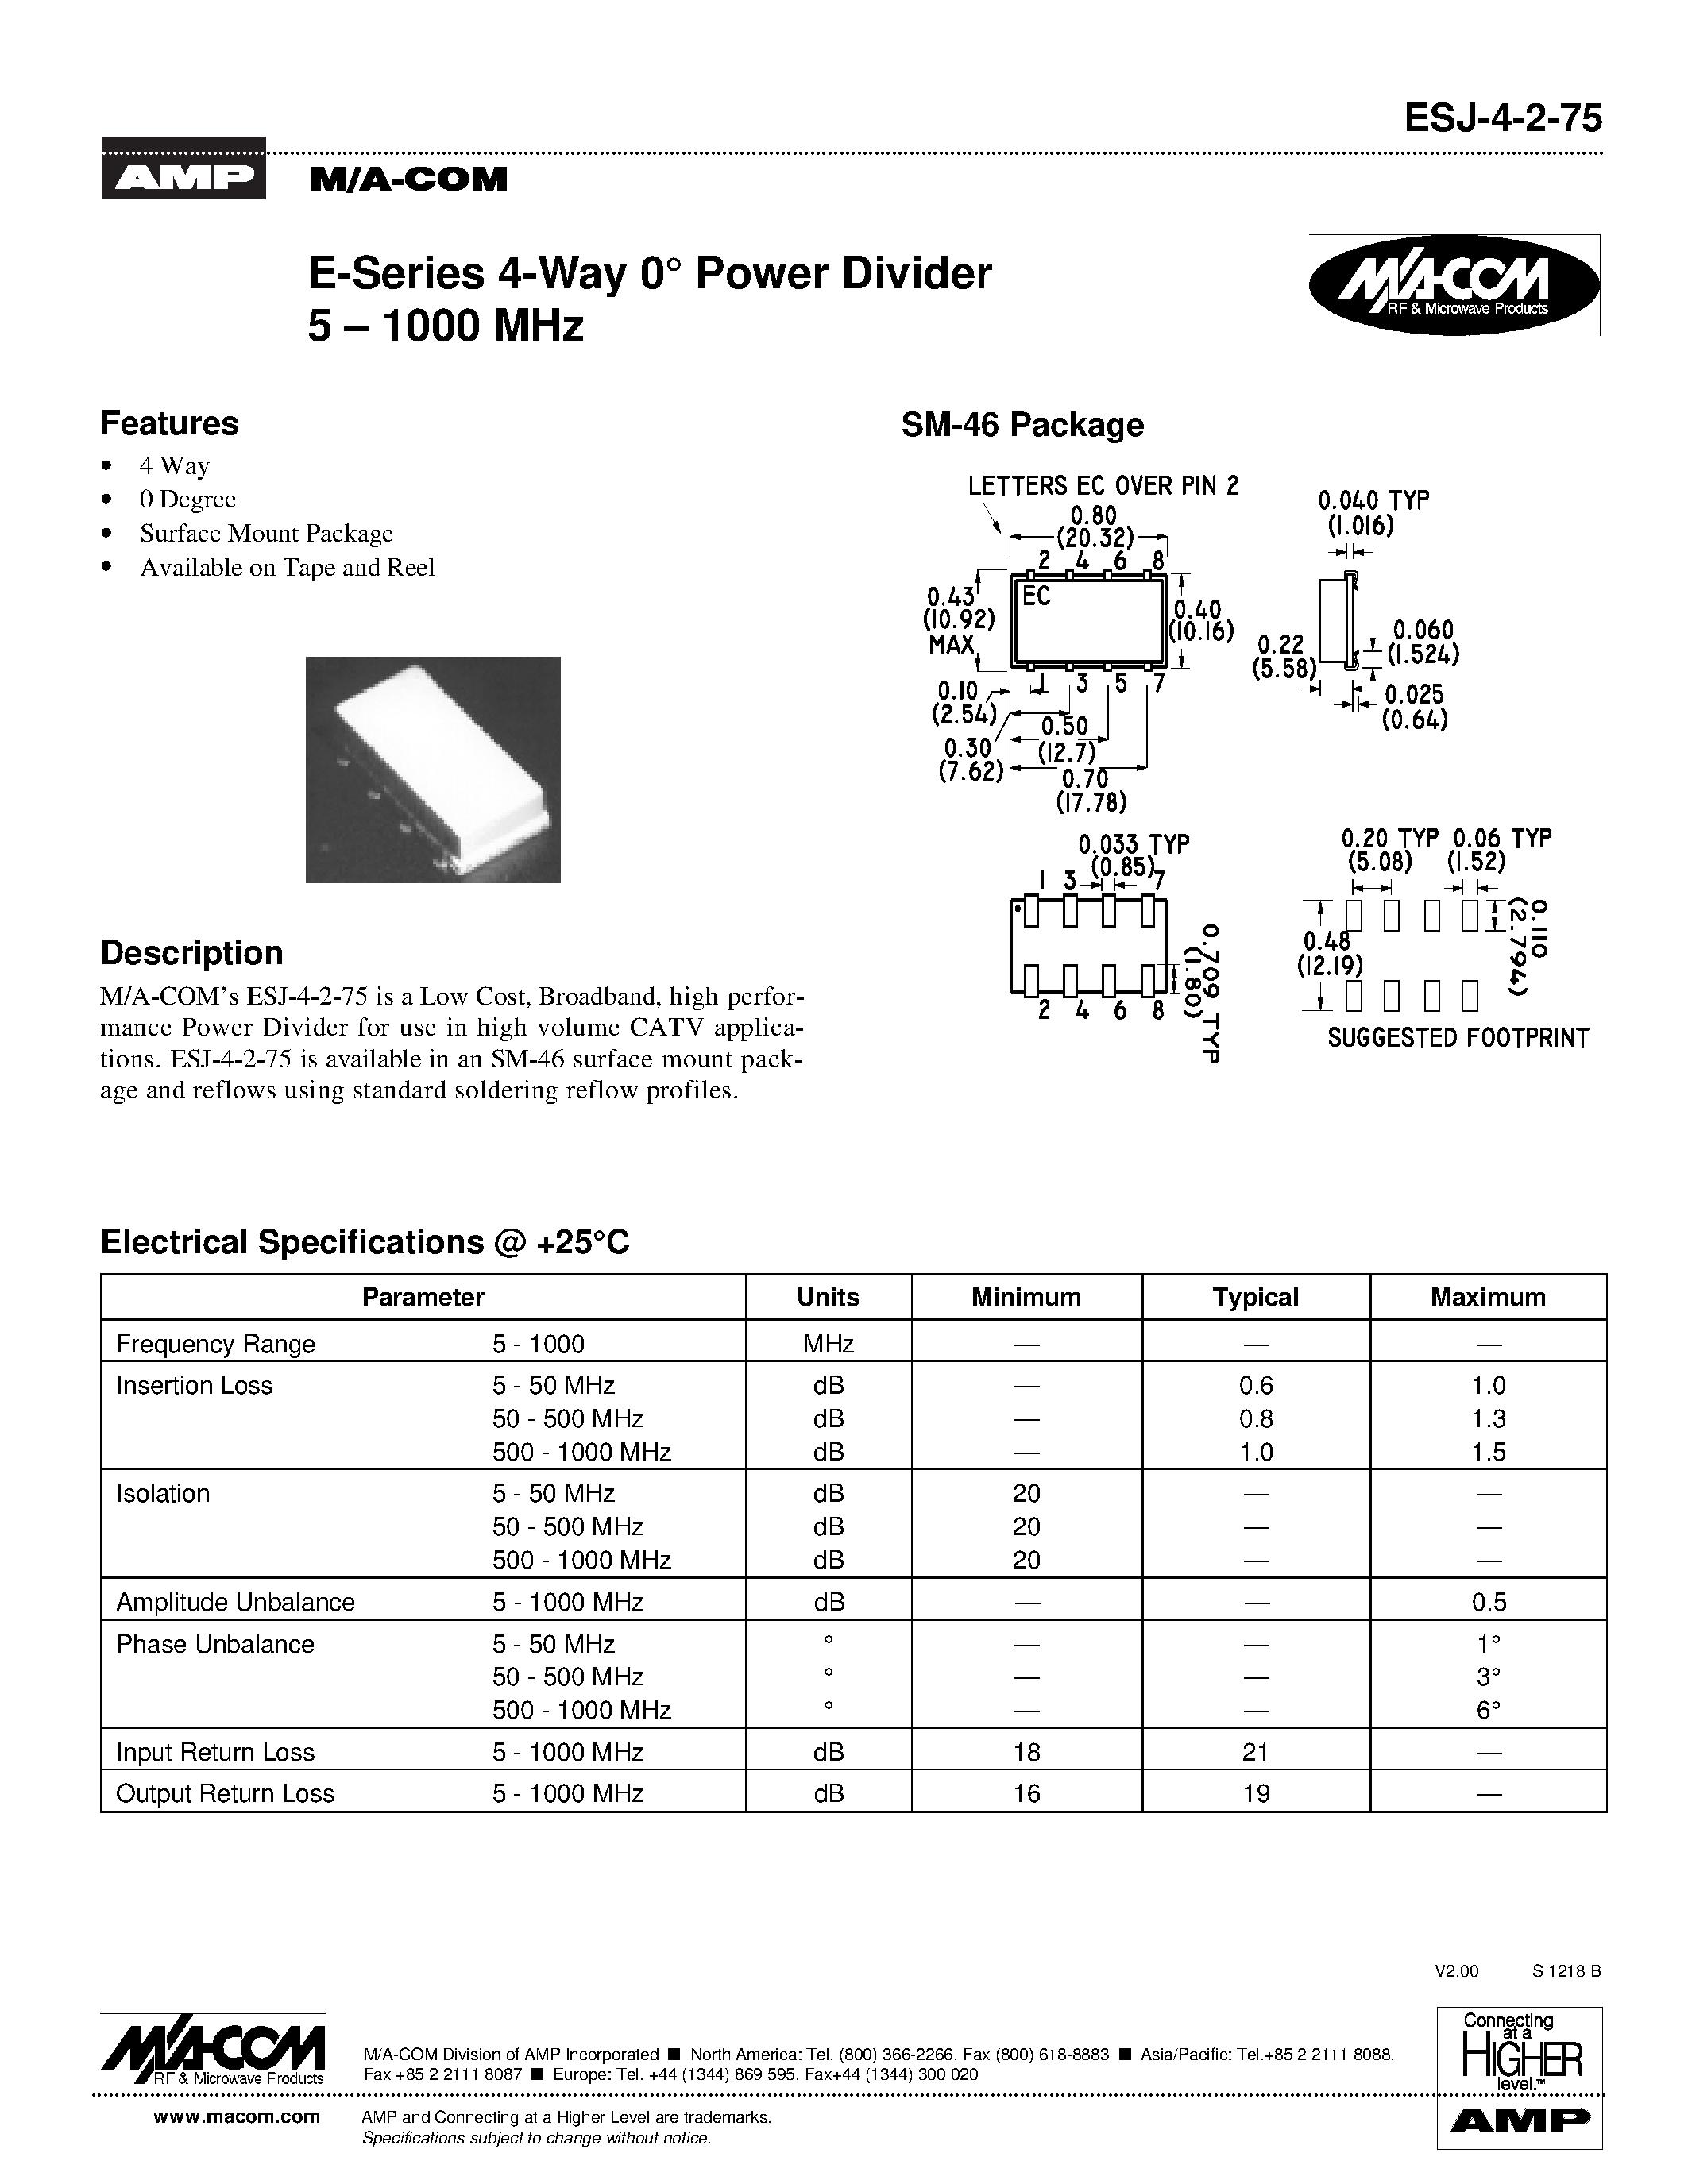 Даташит ESJ-4-2-75-E-Series 4-Way 0 Power Divider 5 - 1000 MHz страница 1